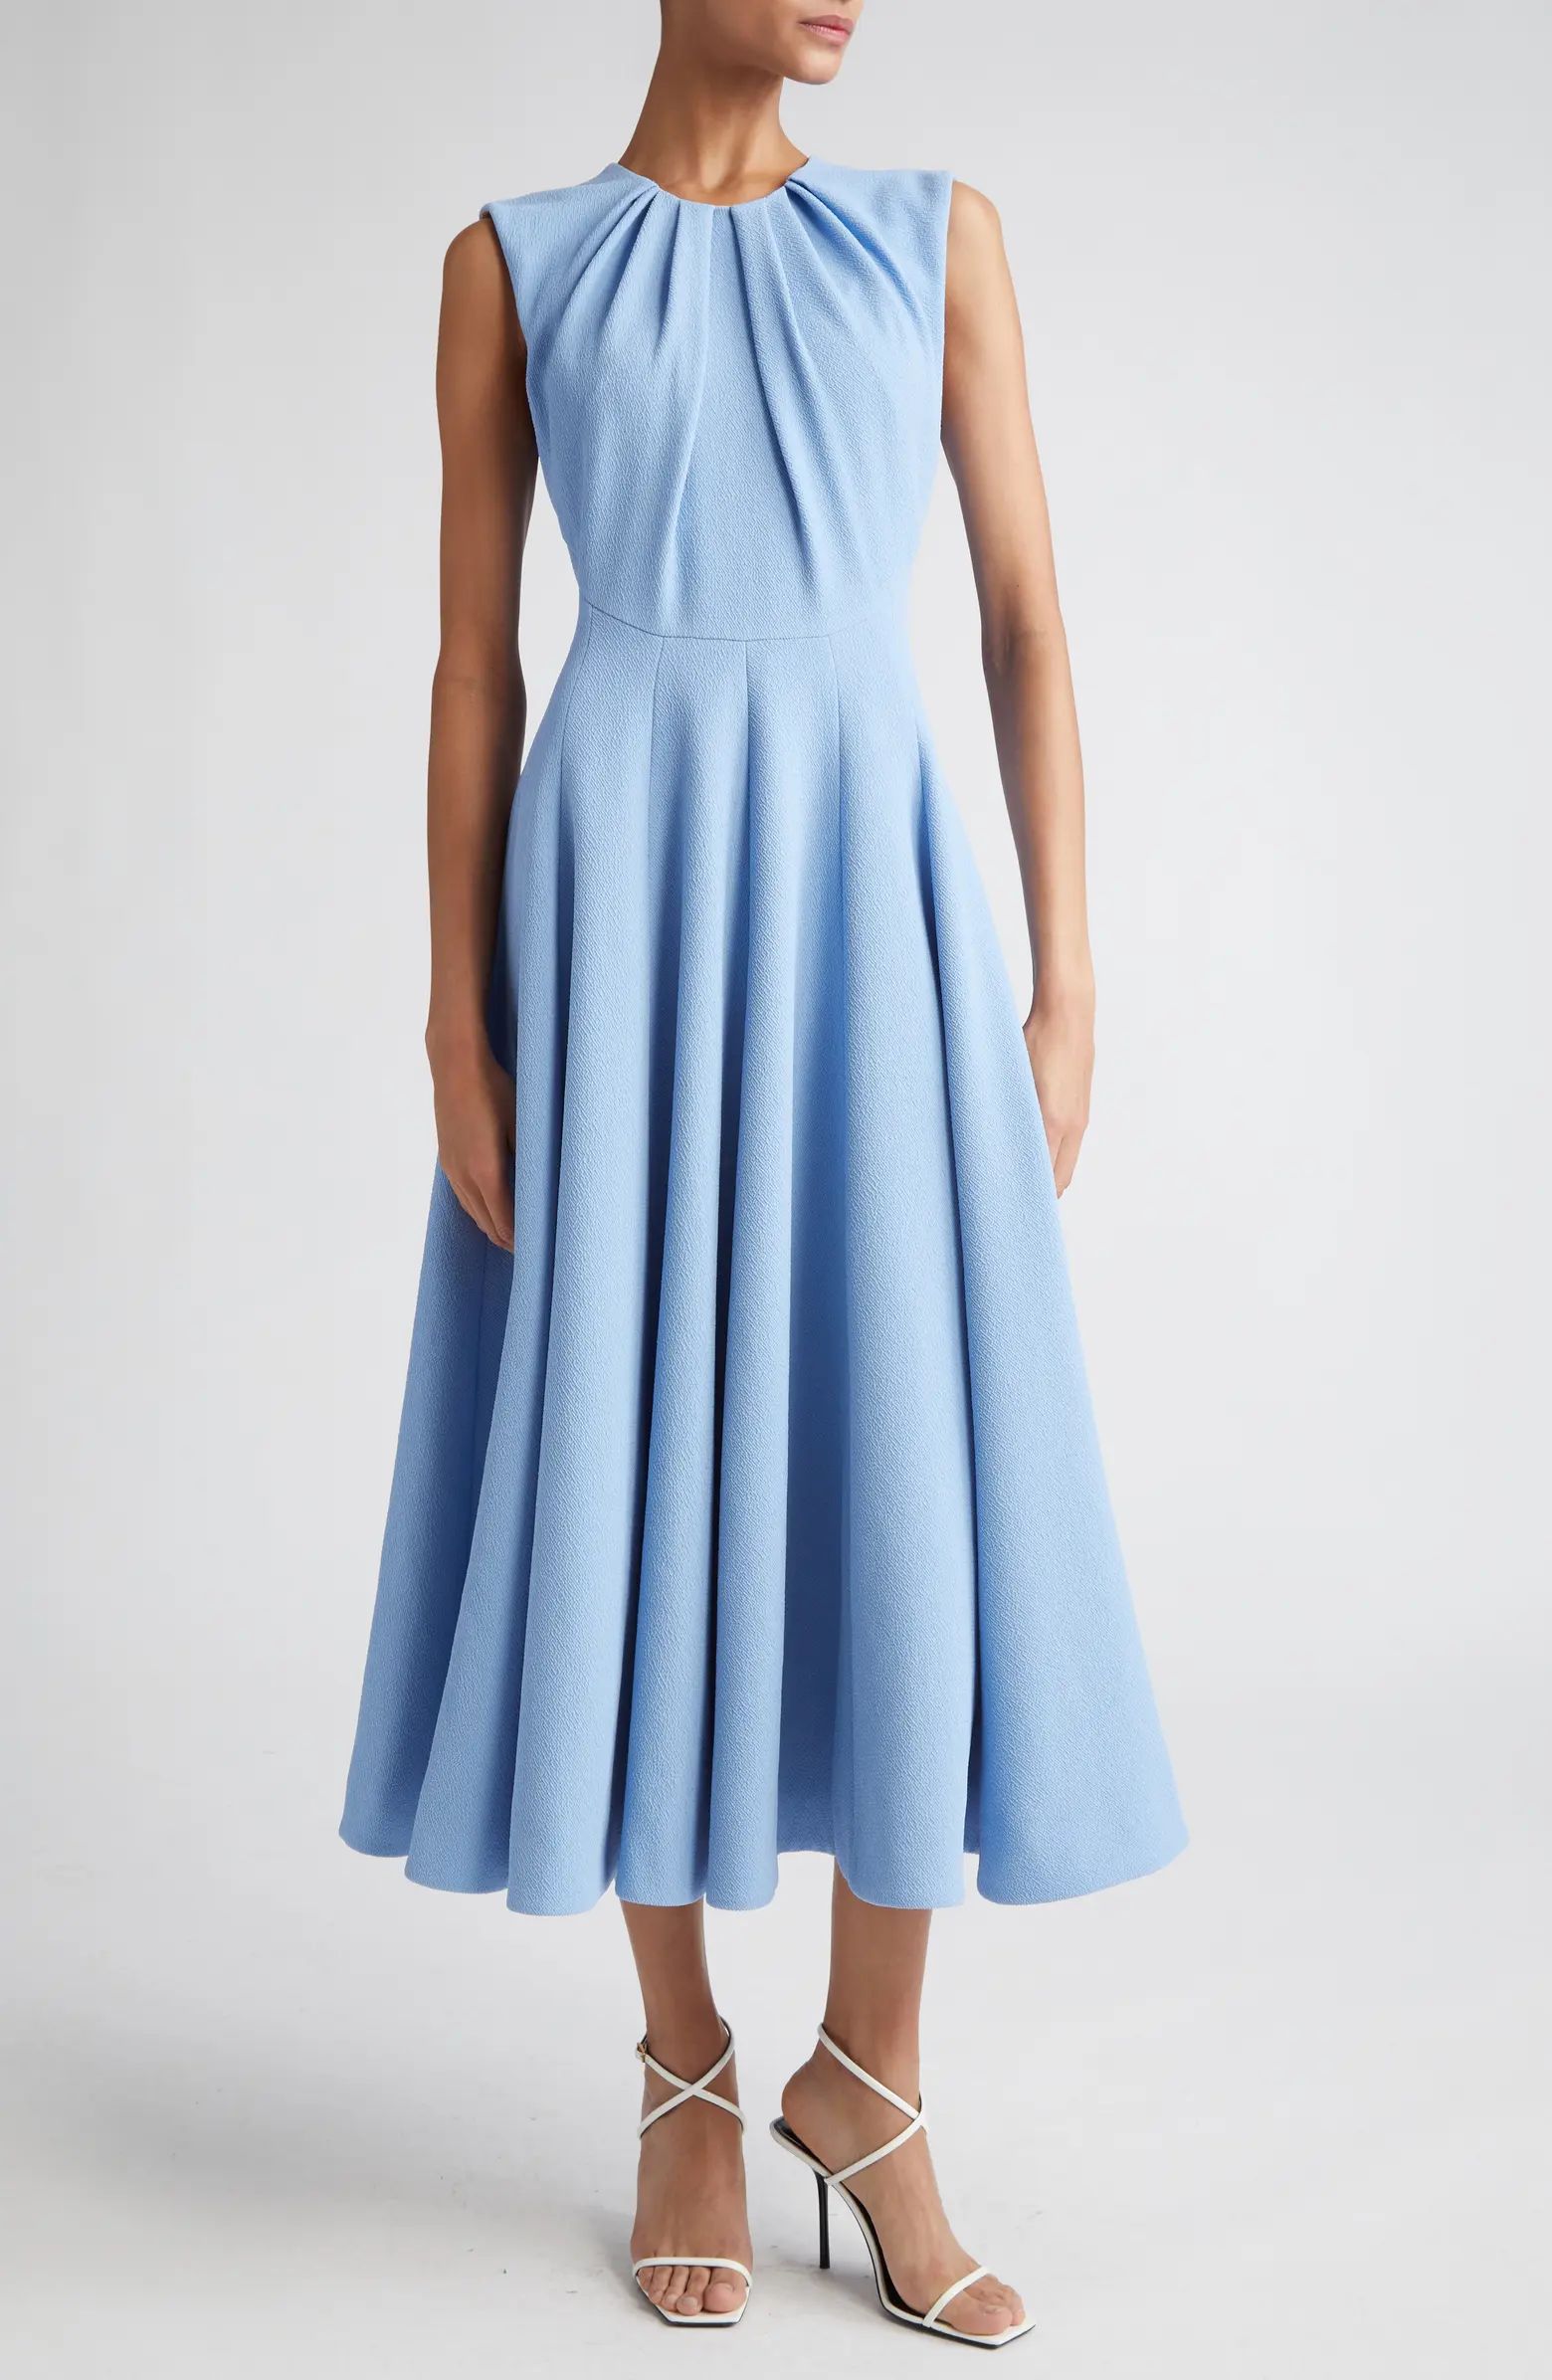 Emilia Wickstead Marlen Pleated Double Crepe A-Line Dress | Nordstrom | Nordstrom